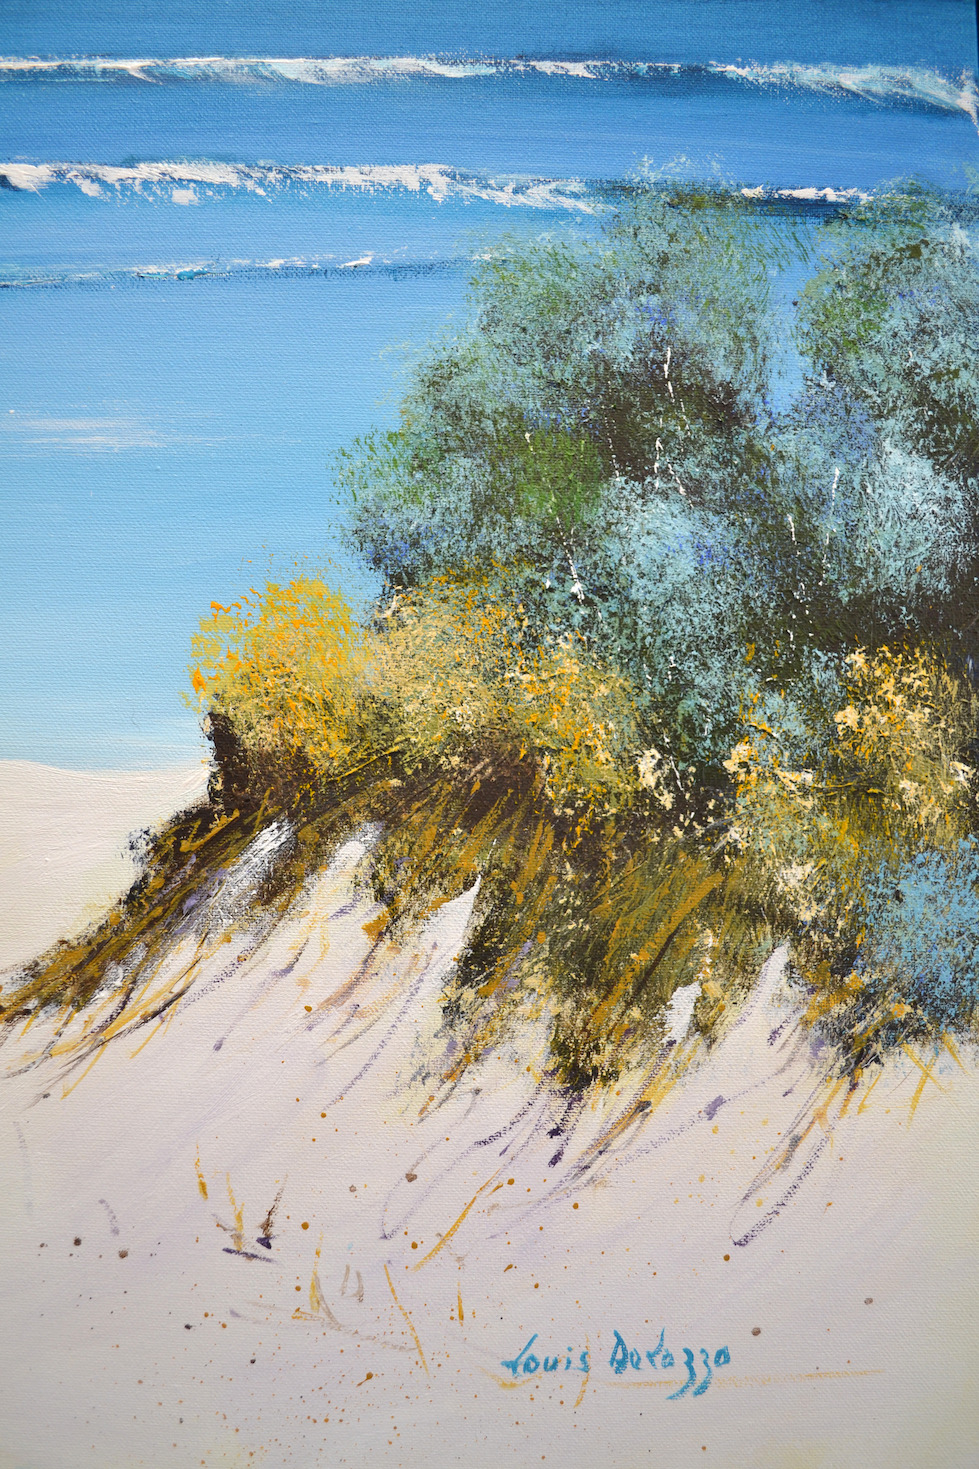 Close Up Signature Of Acrylic Painting "Shore Break South Stradbroke" By Louis Dalozzo